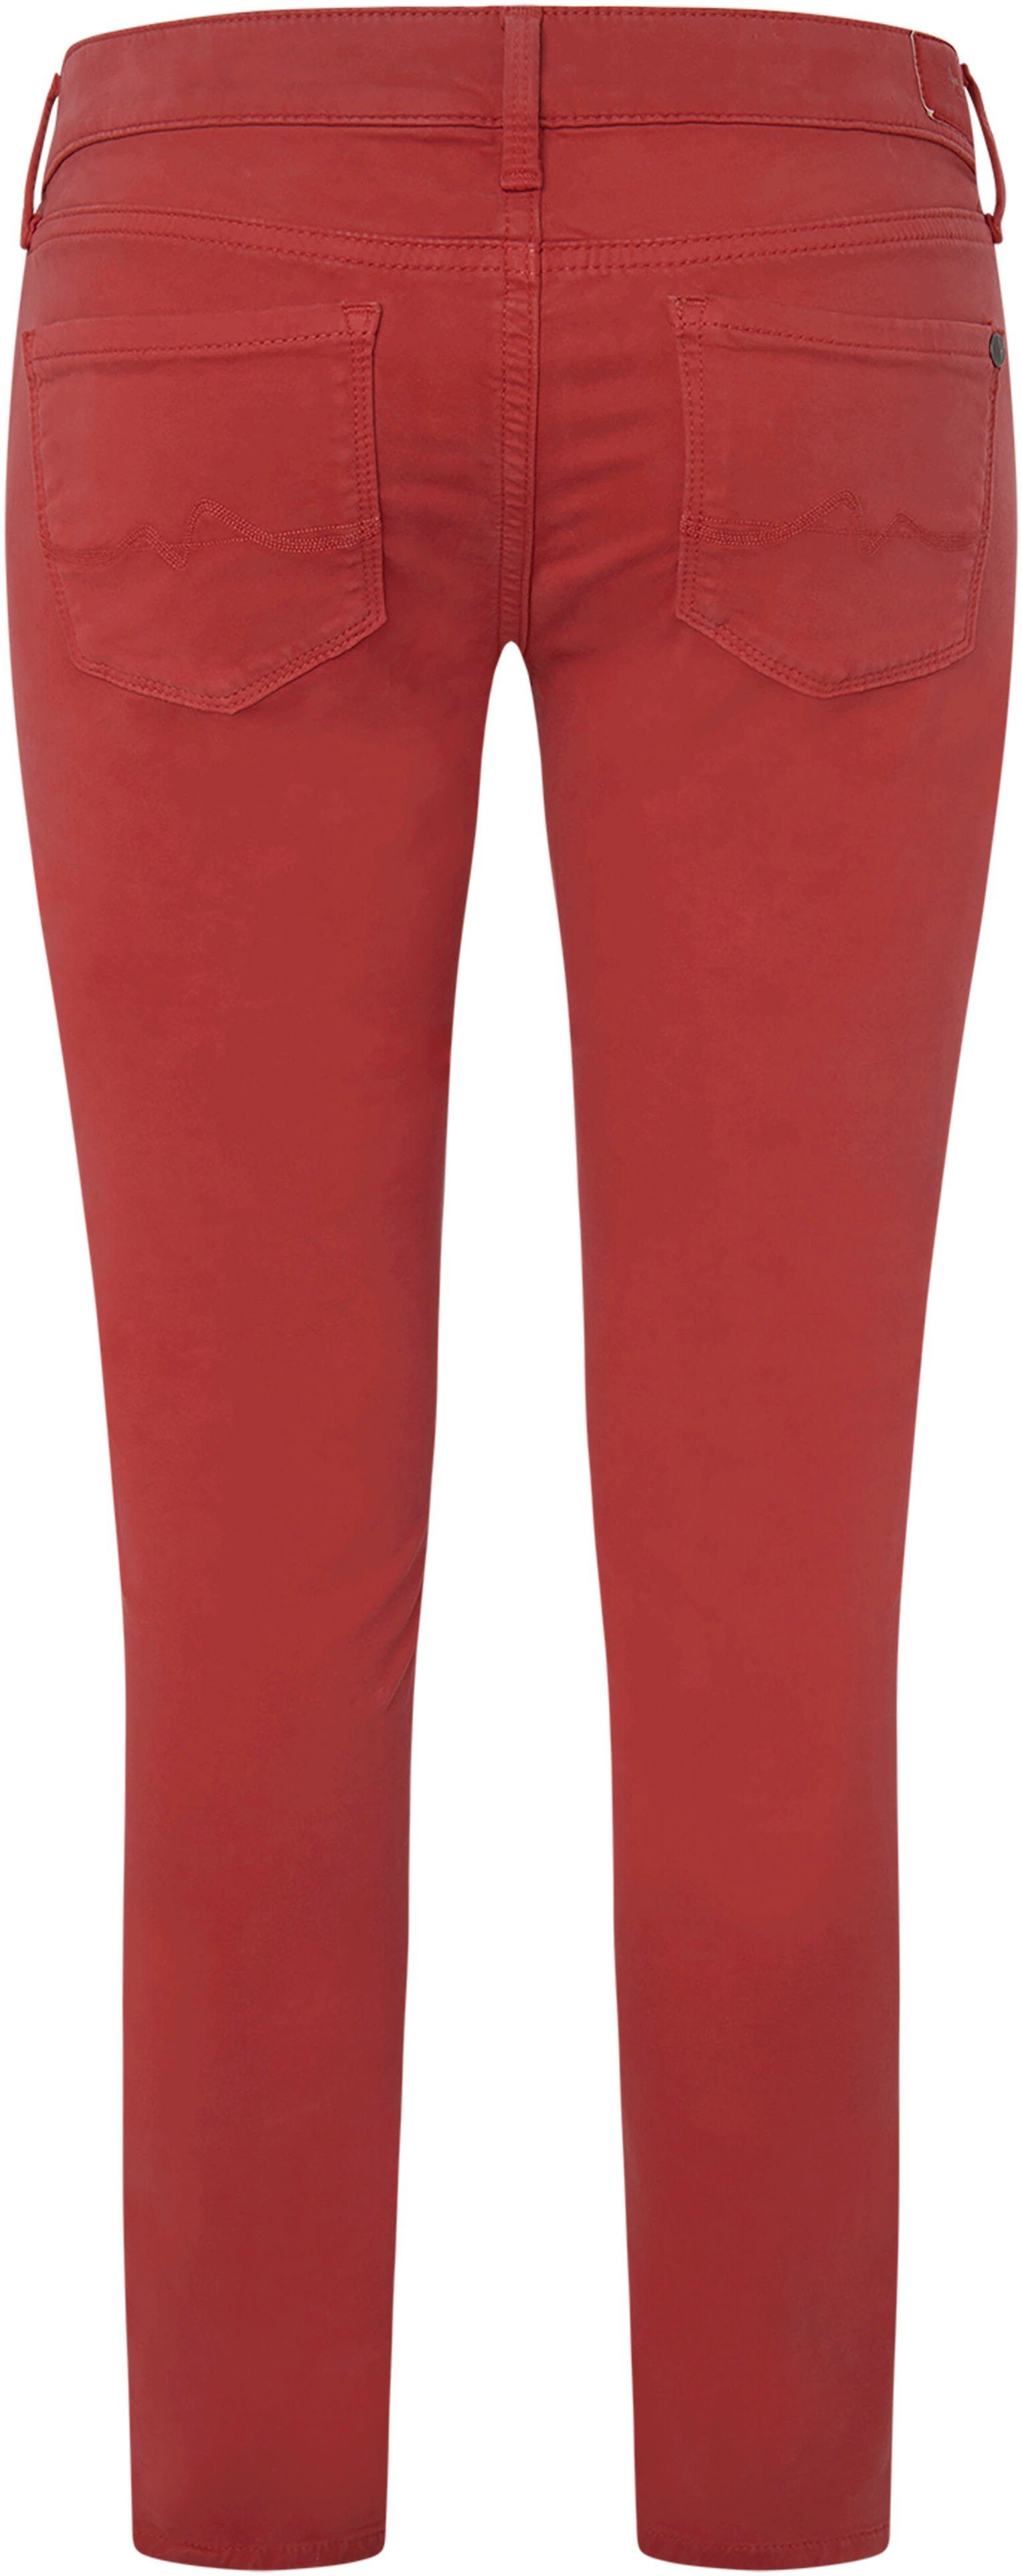 red Skinny Jeans 5-Pocket-Hose Soho studio Pepe